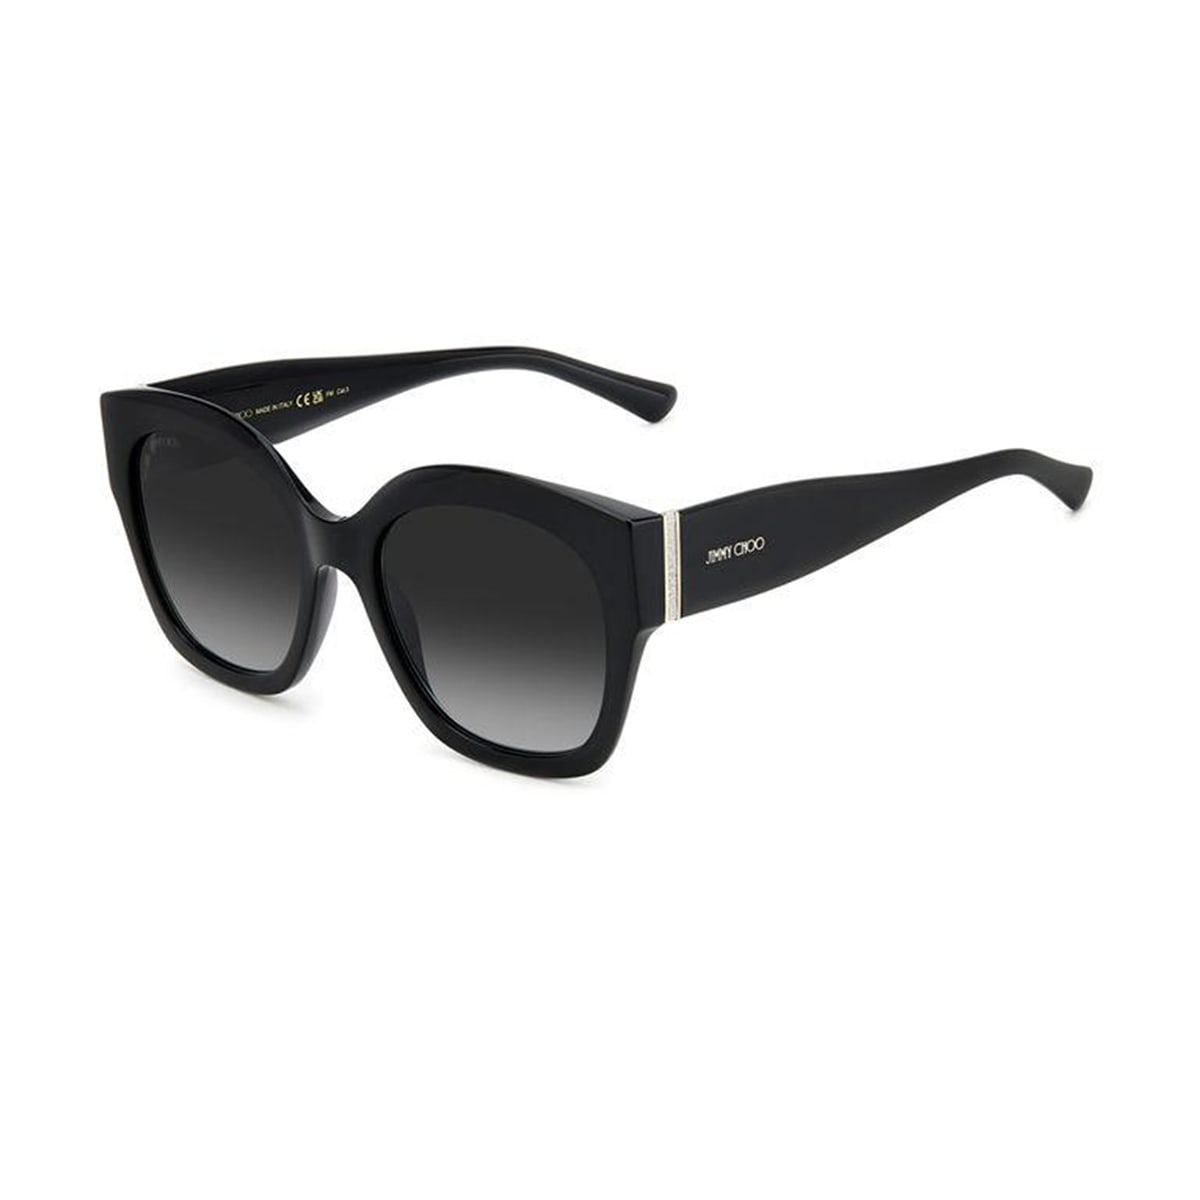 Jc Leela/s 807/9o Black Sunglasses